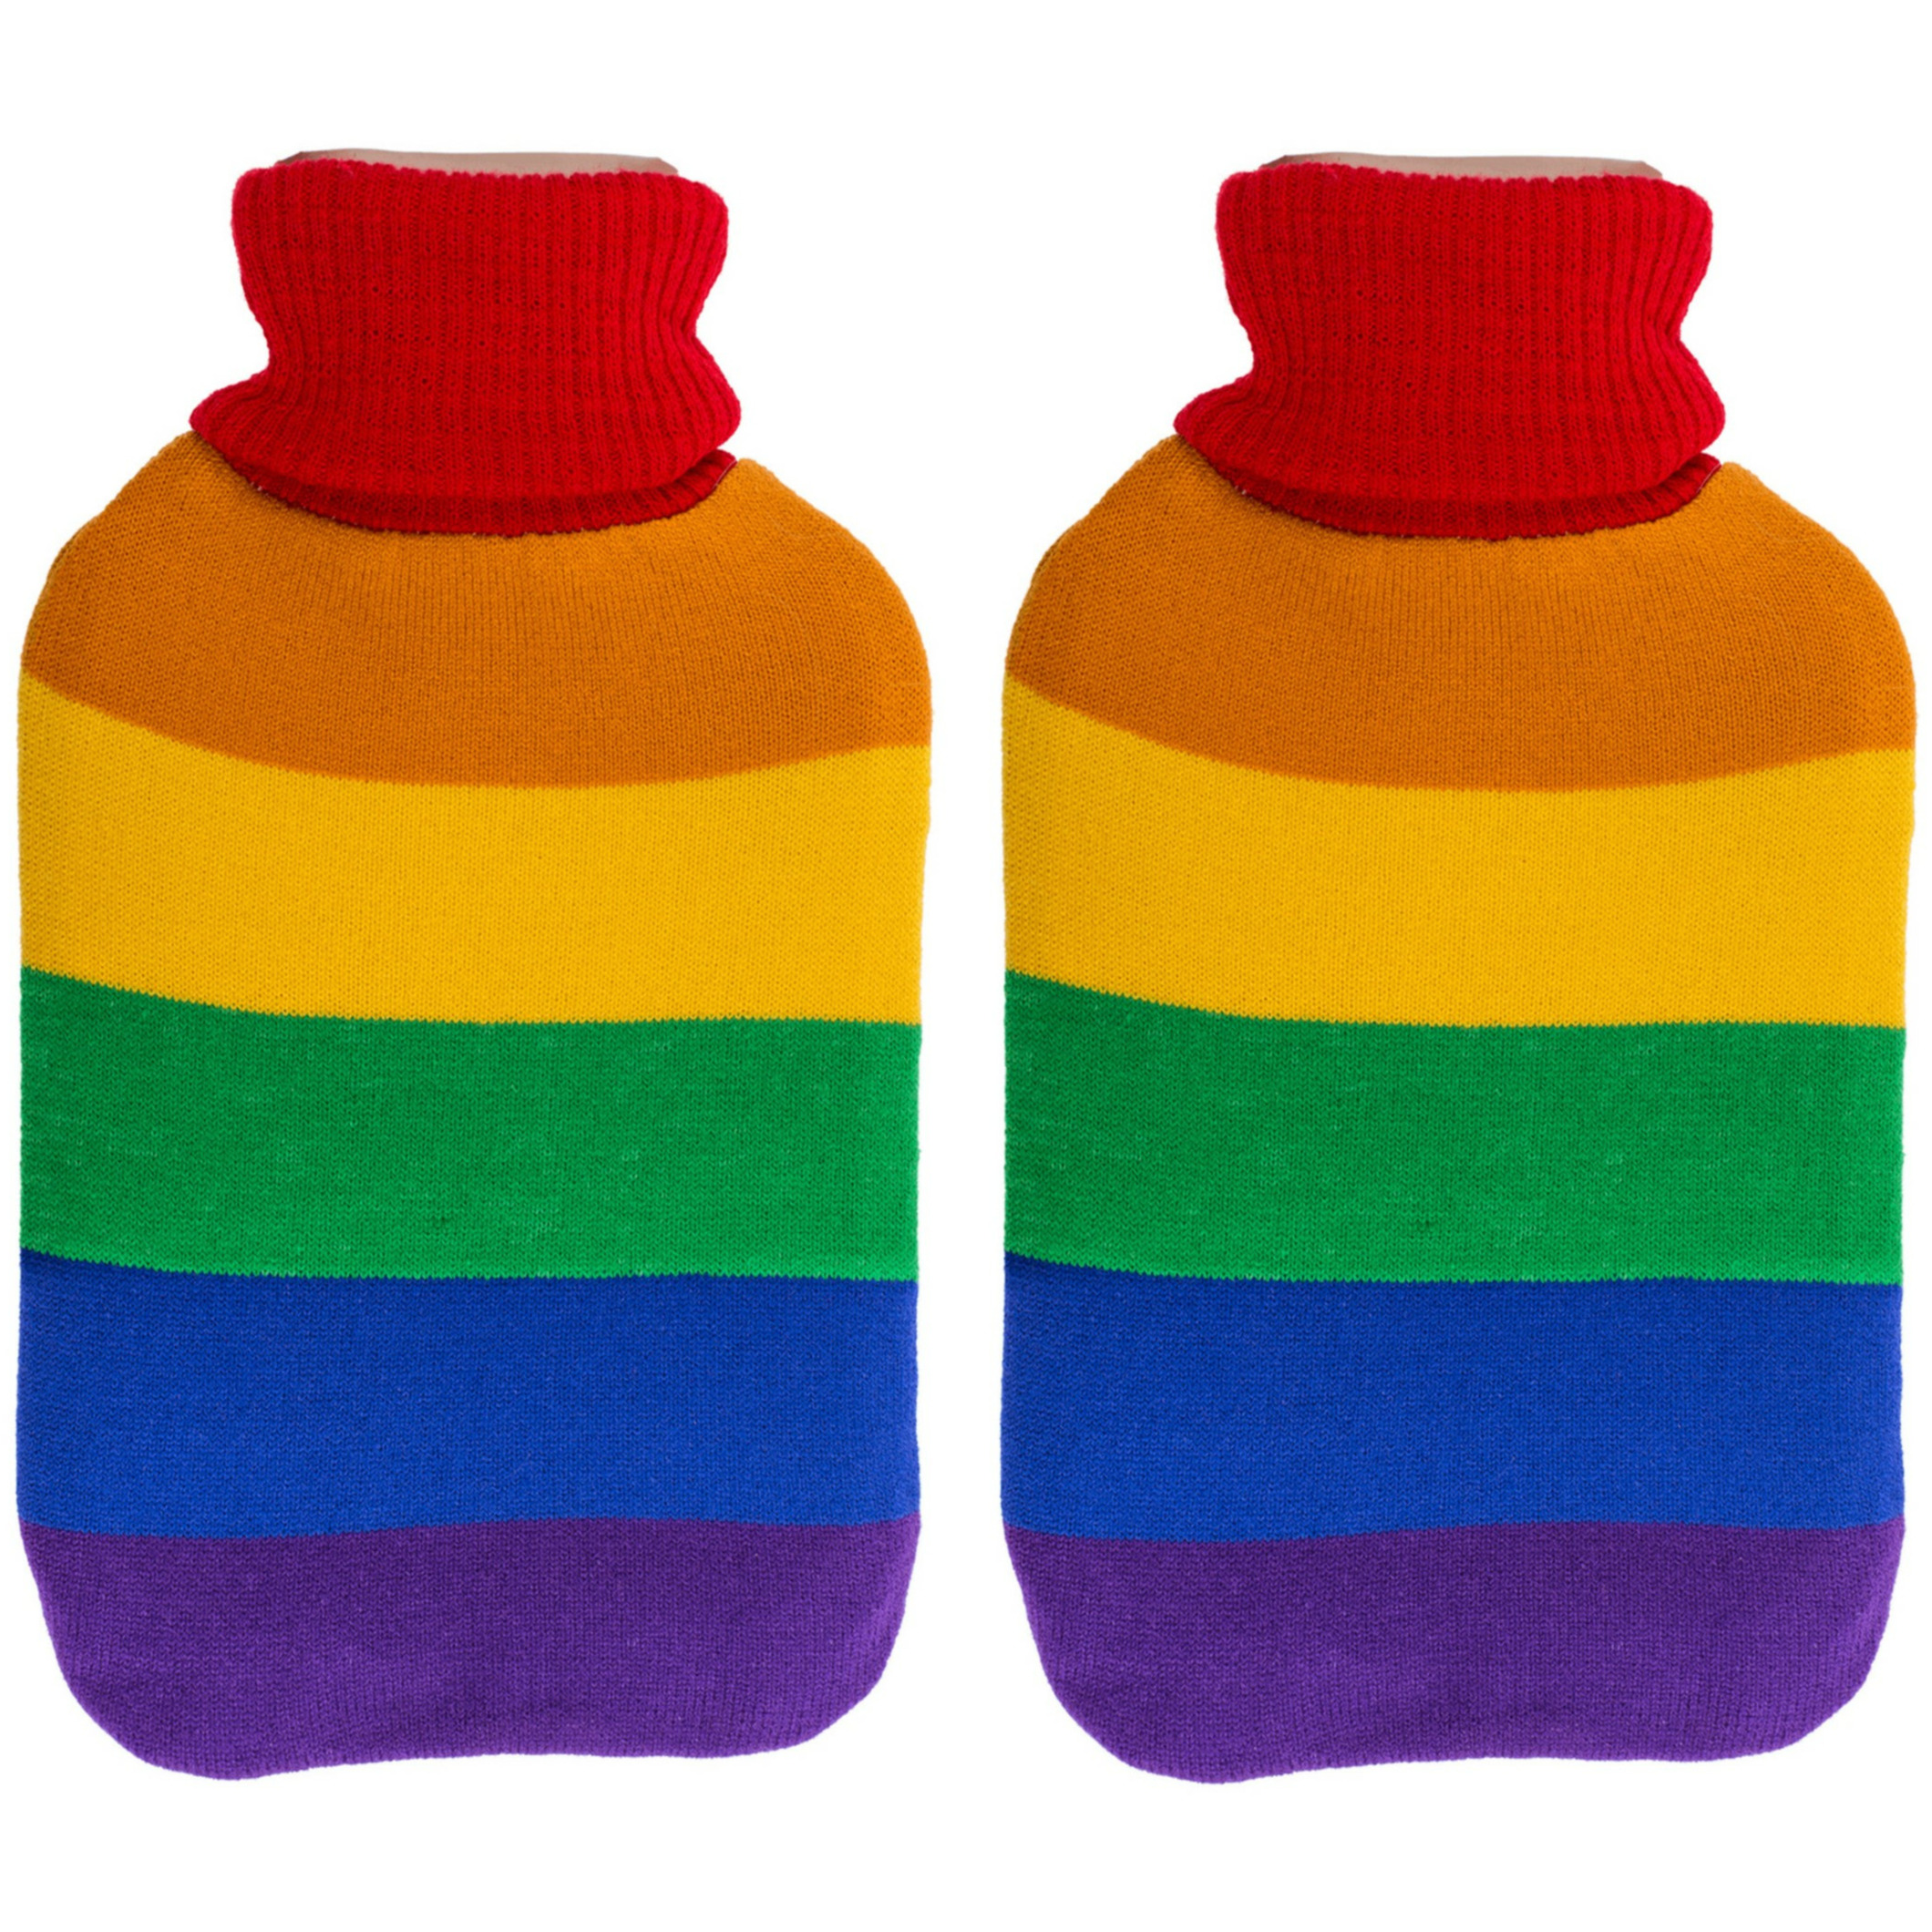 Warmwater kruik 2x Pride-regenboog thema kleuren 2 liter 18 x 34 cm